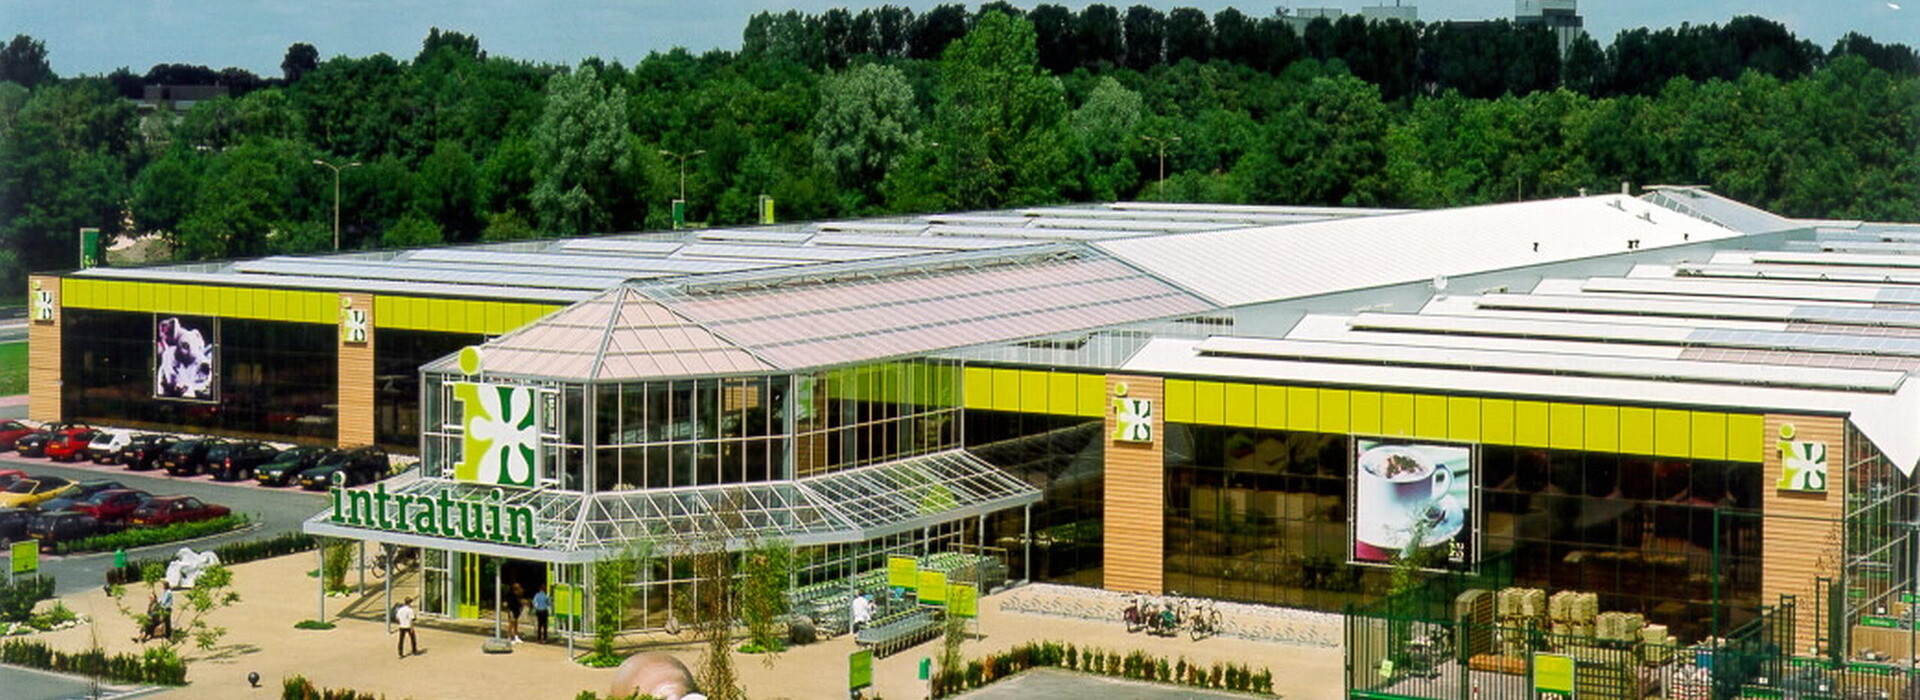 Nieuwbouw Intratuin, Almelo (Nederland) 2000